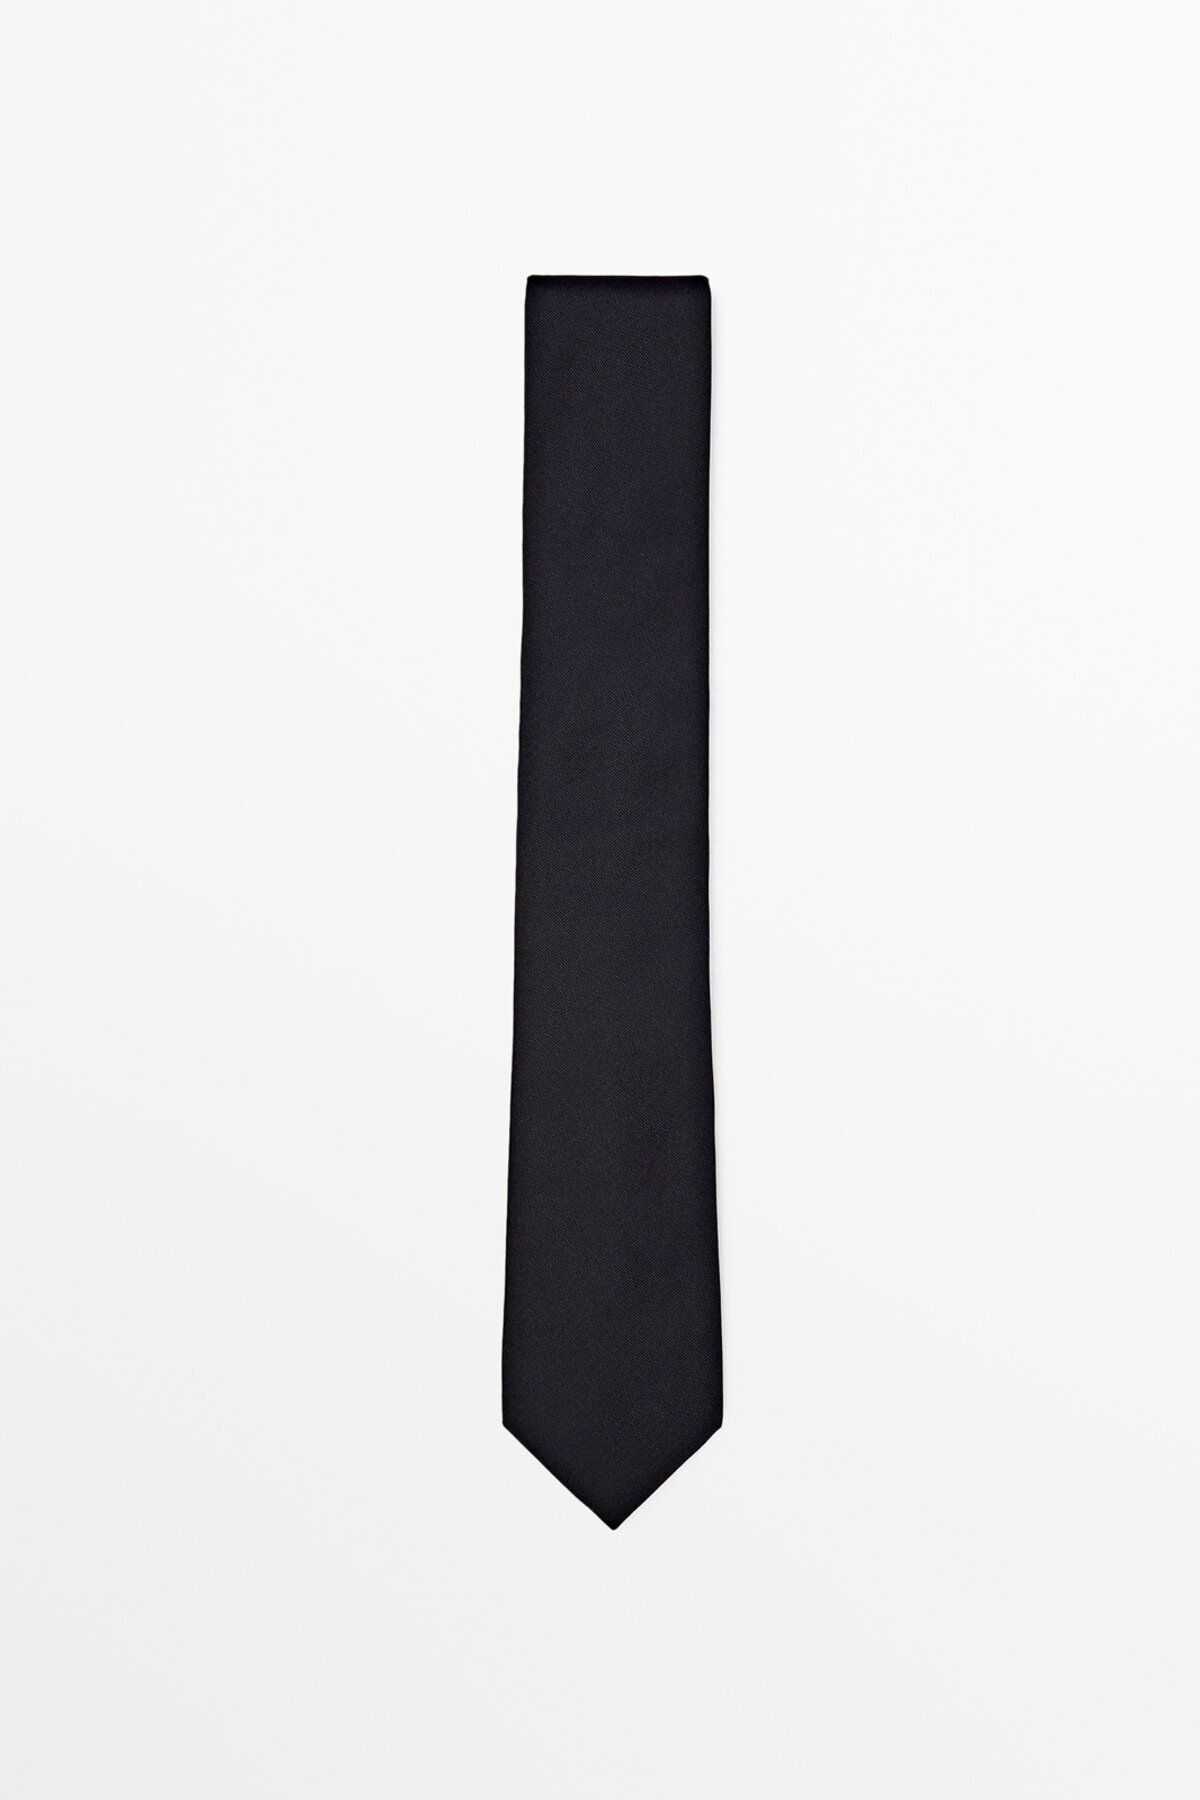 Massimo Dutti Pamuk ve ipek karışımı dimi kravat